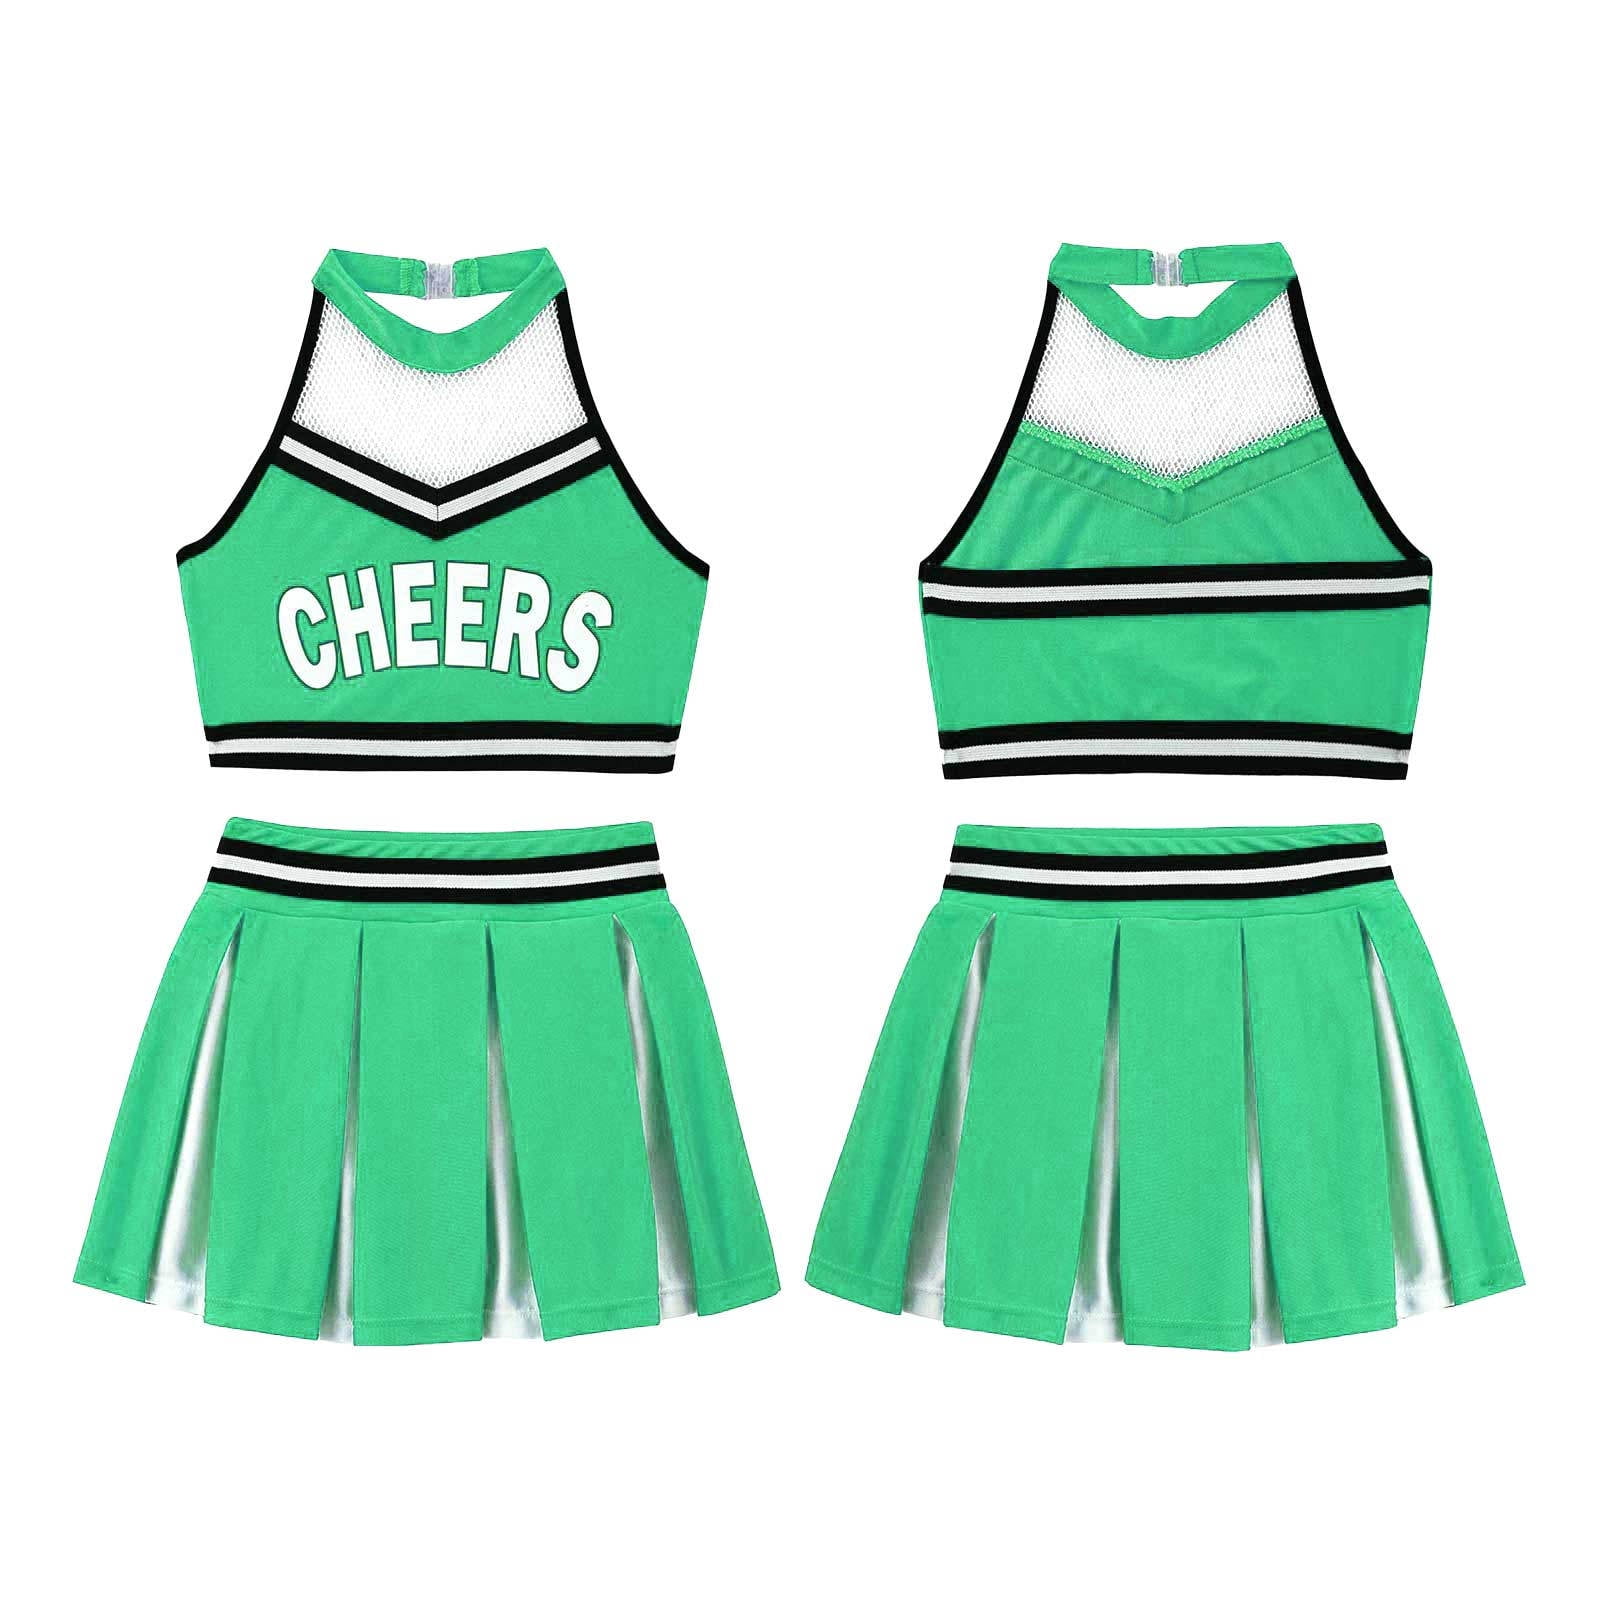 inhzoy-kids-girls-cheer-leader-costume-cheerleading-uniform-outfit